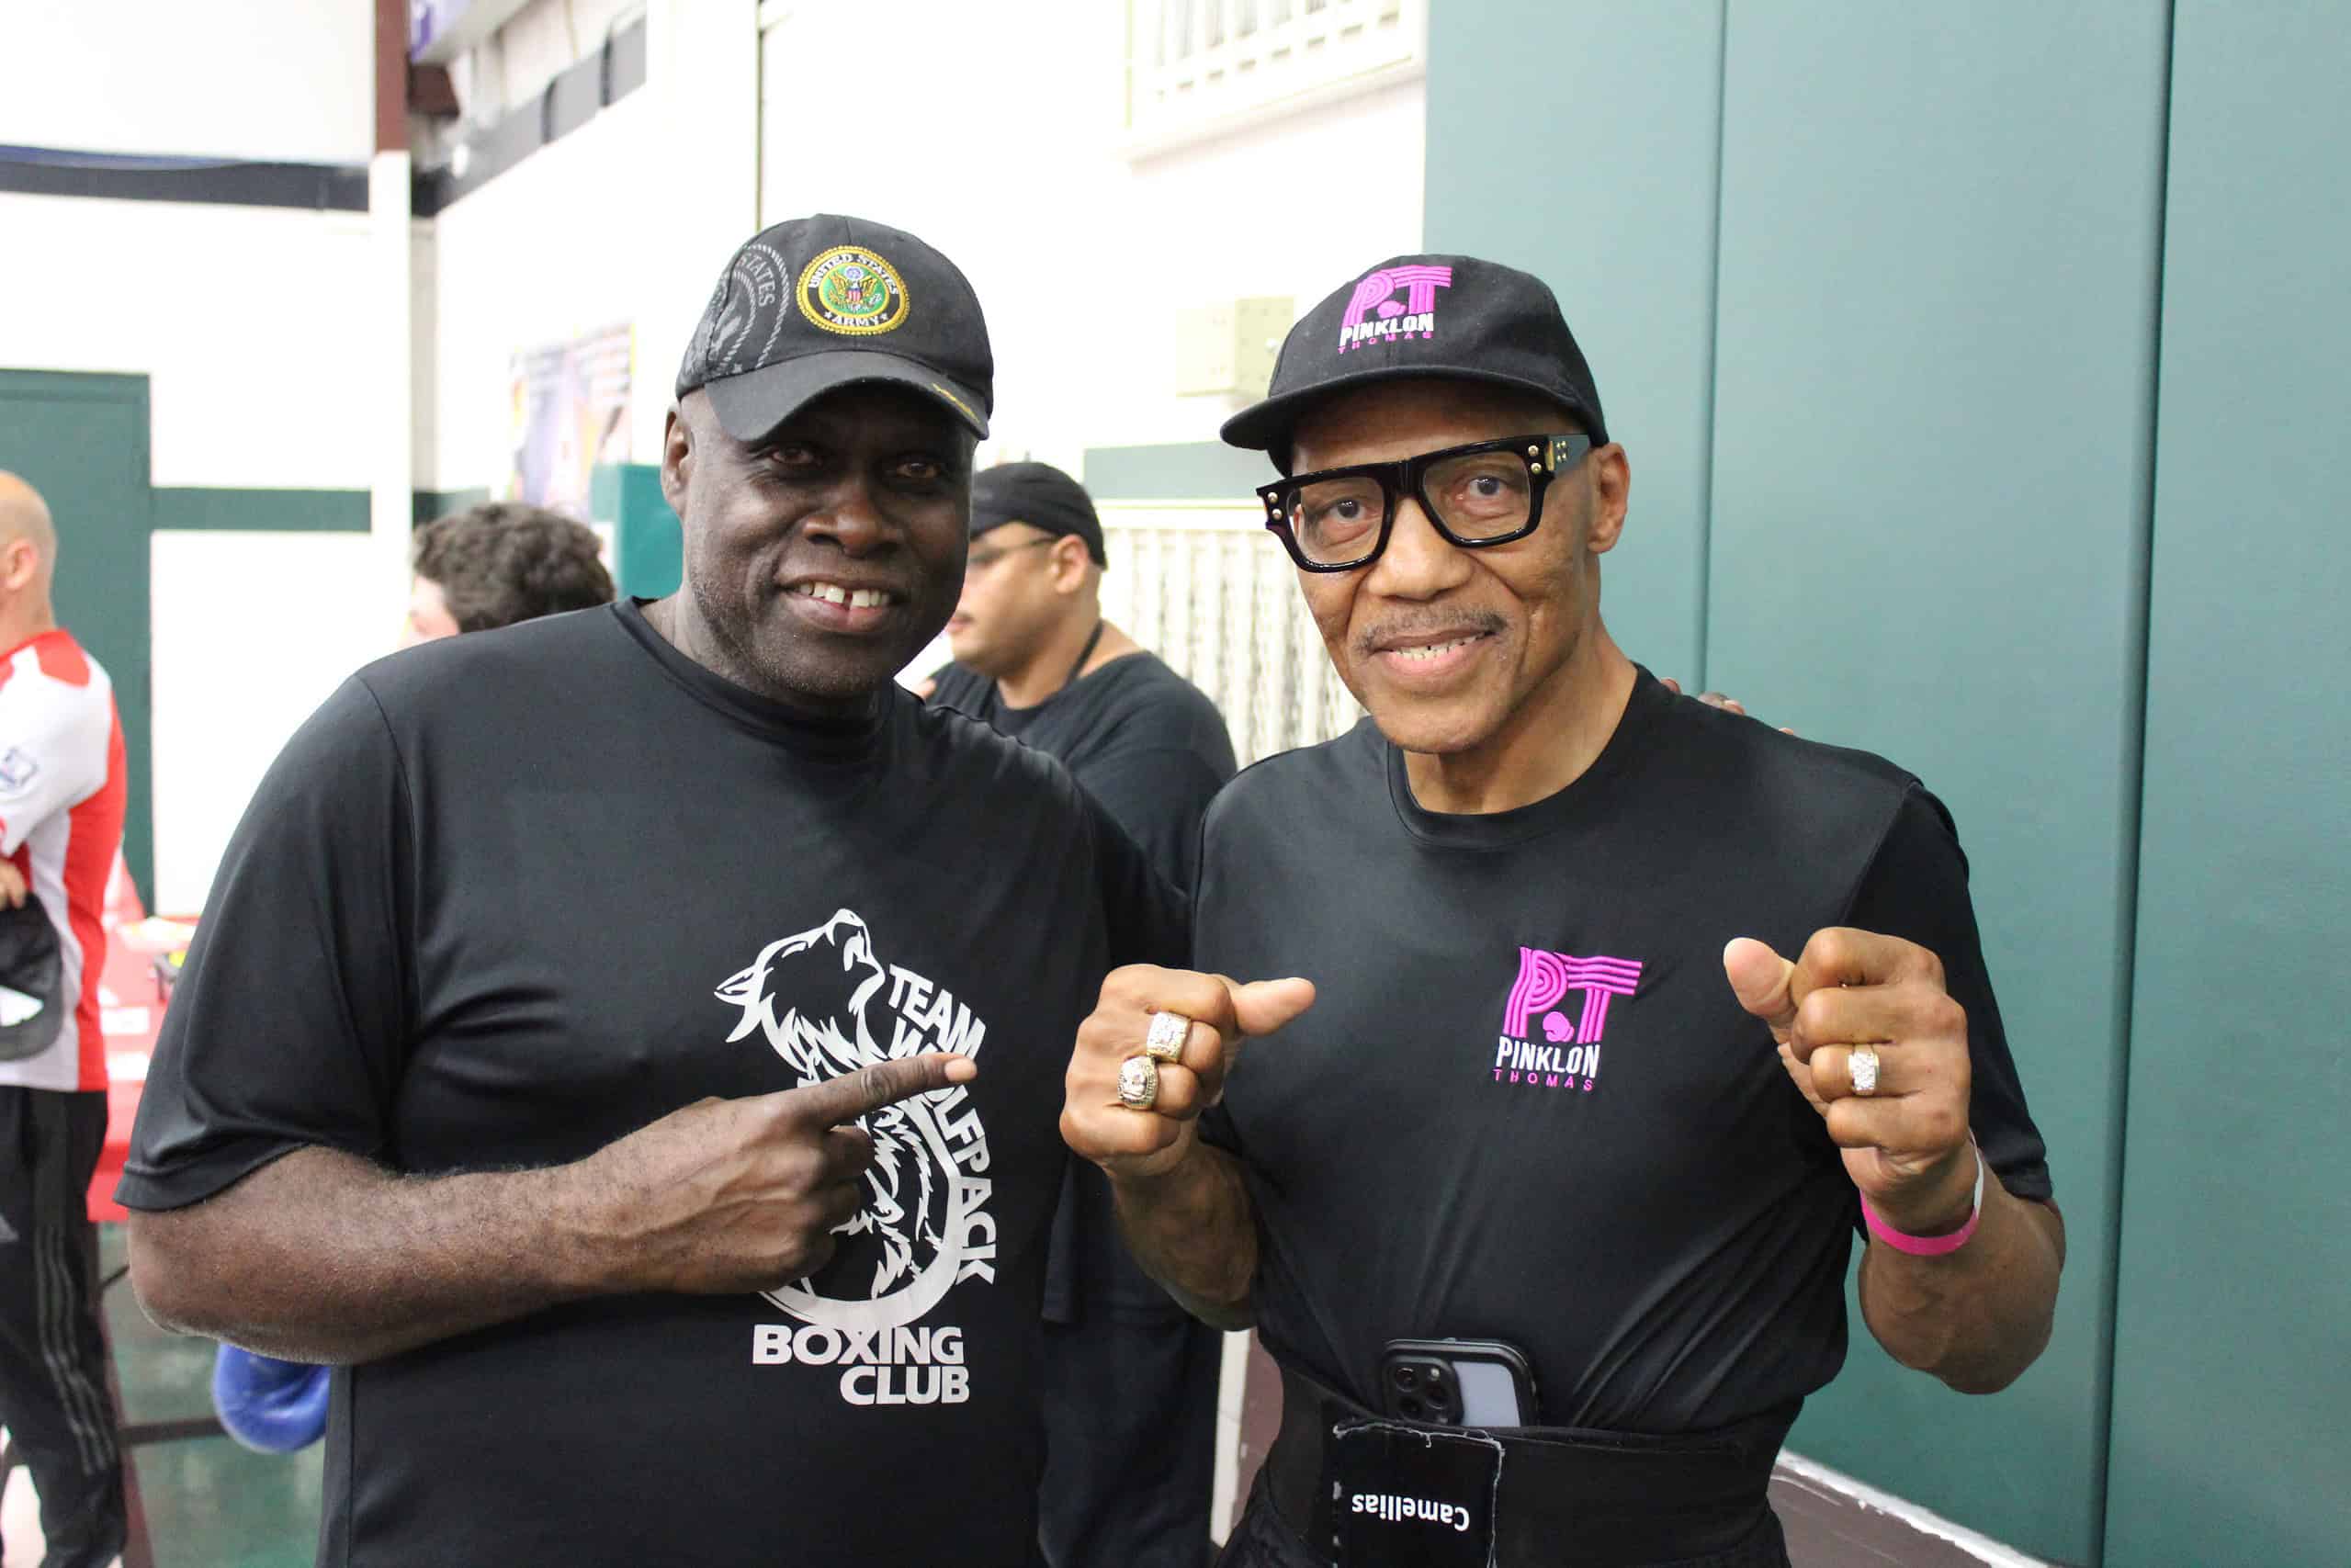 Coach Wilson (left) poses with legendary boxer Pinklon Thomas (right) at the Florida Junior Olympics.